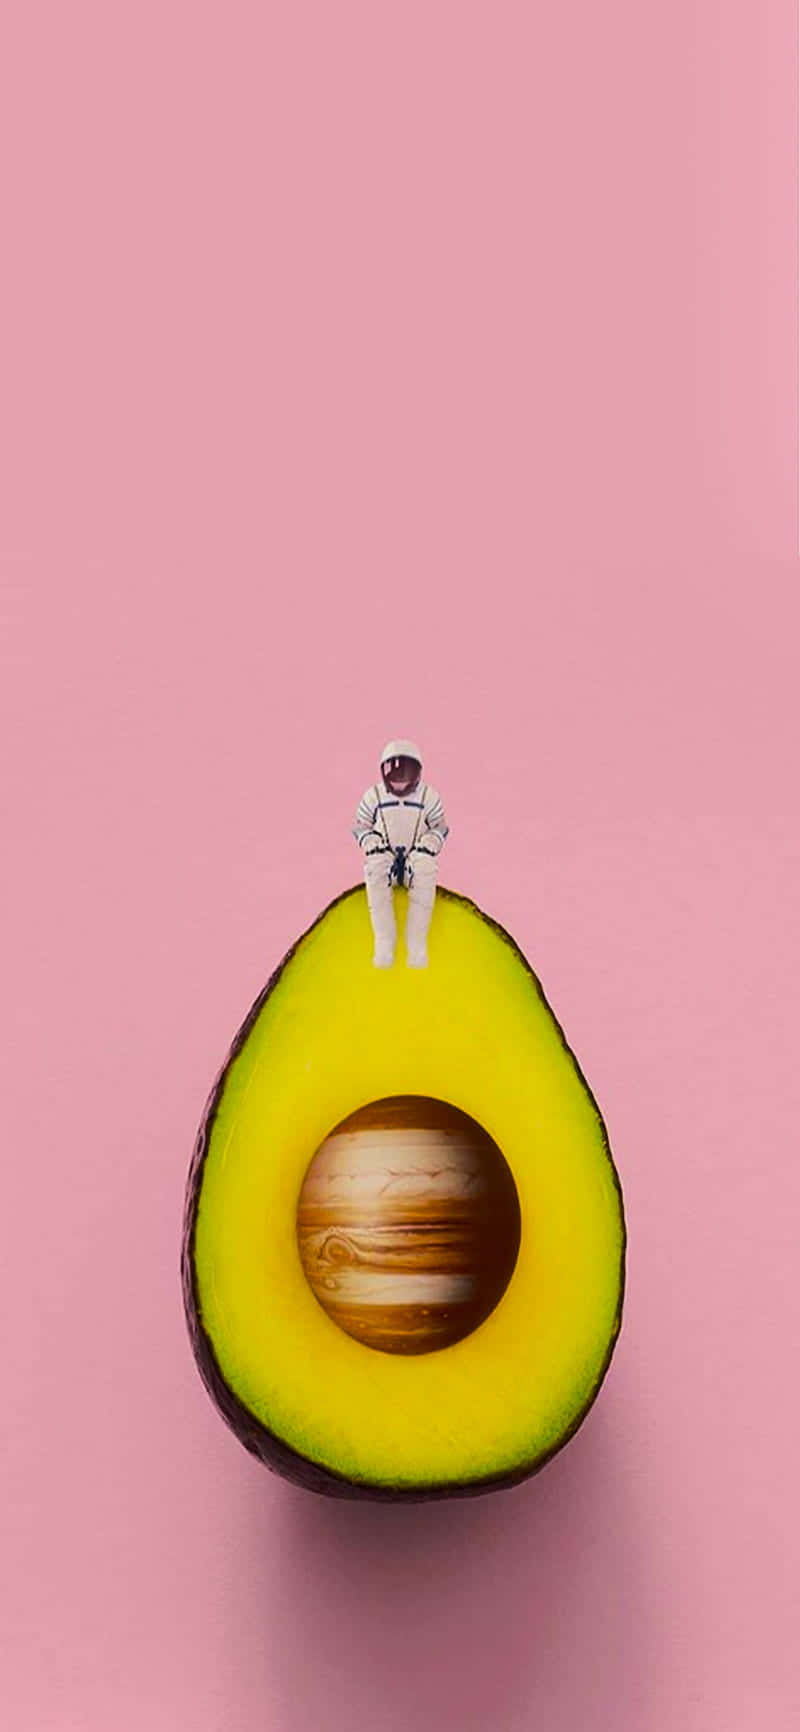 Nyd at bruge dit nyeste Avocado Iphone baggrund. Wallpaper